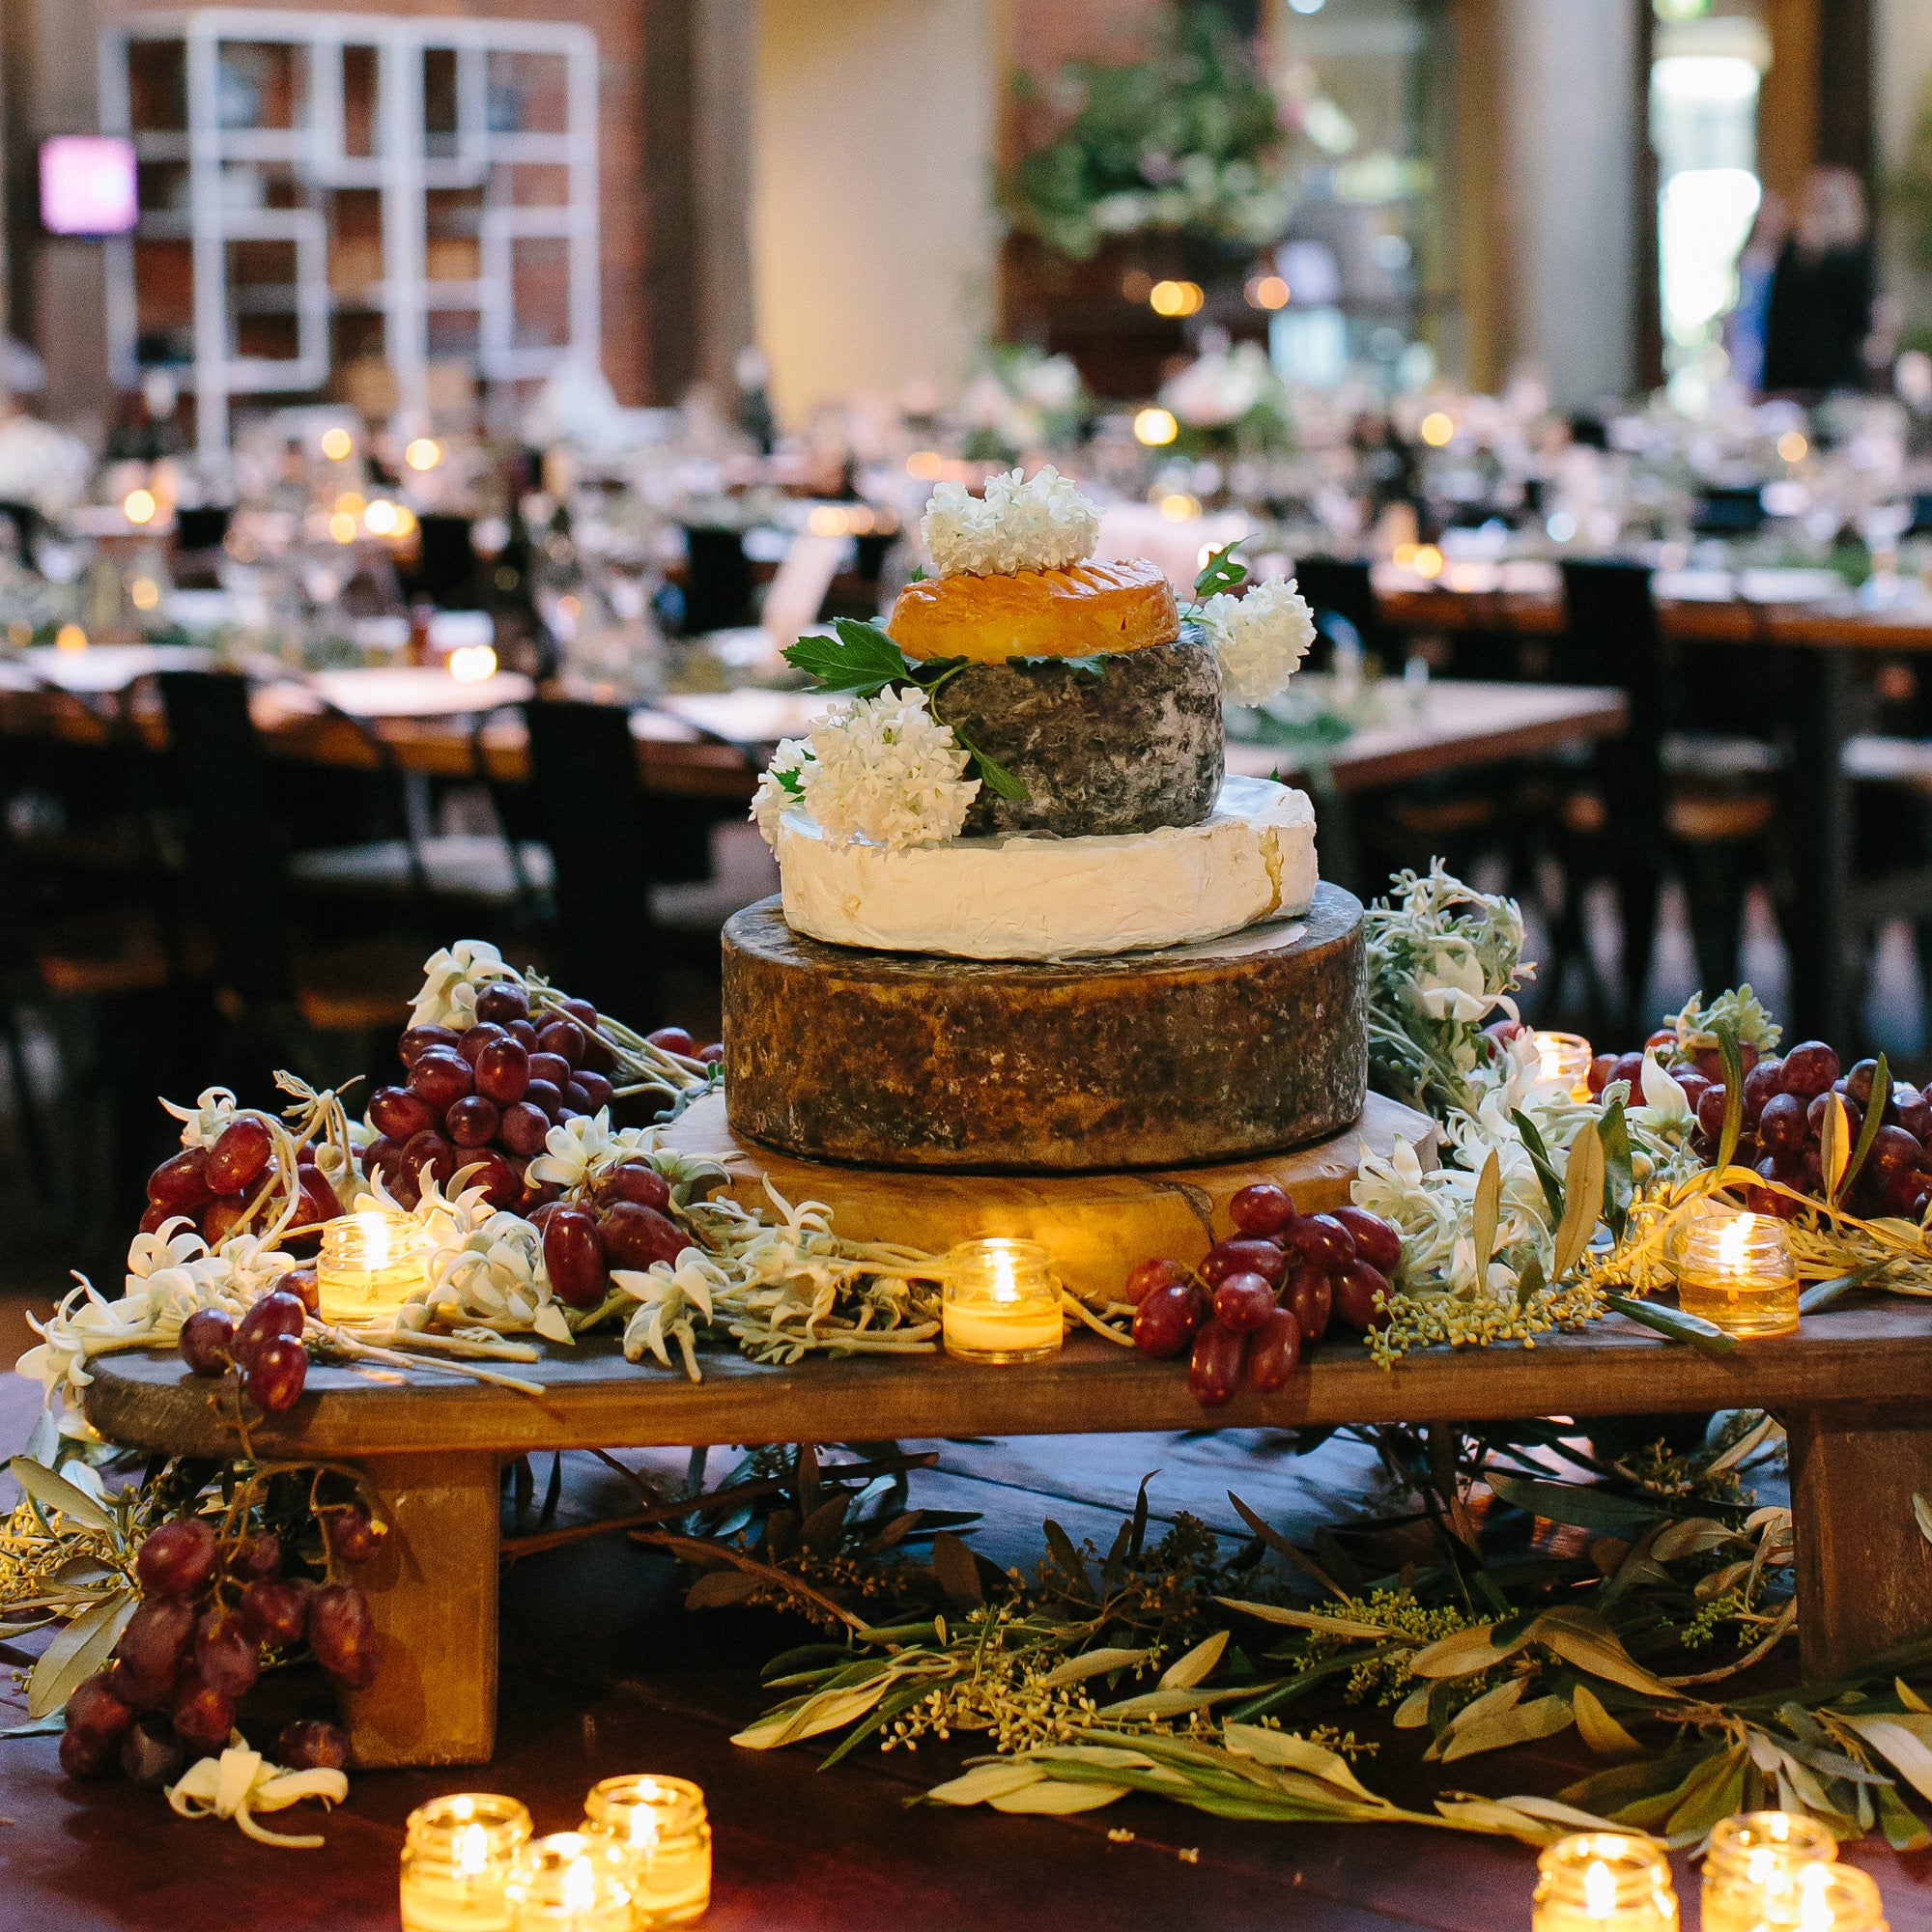 Dessert cheese wheel, wedding dessert table centrepiece idea, love katie and sarah photography, cecilia fox flowers